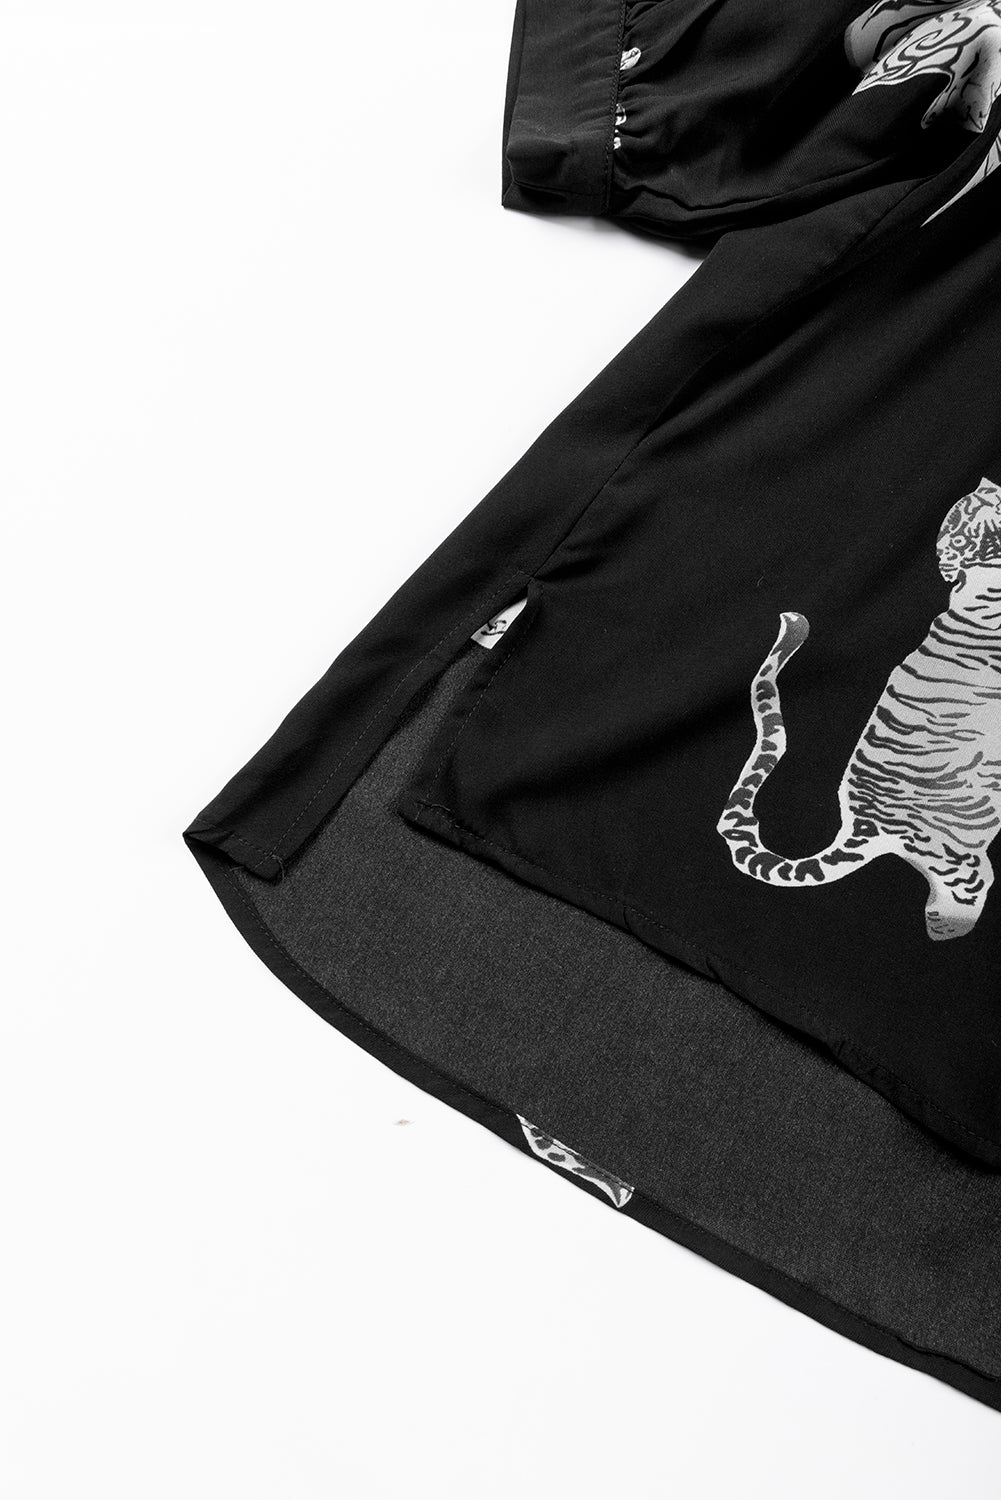 Black Tiger Print 3/4 Sleeve Oversized Shirt